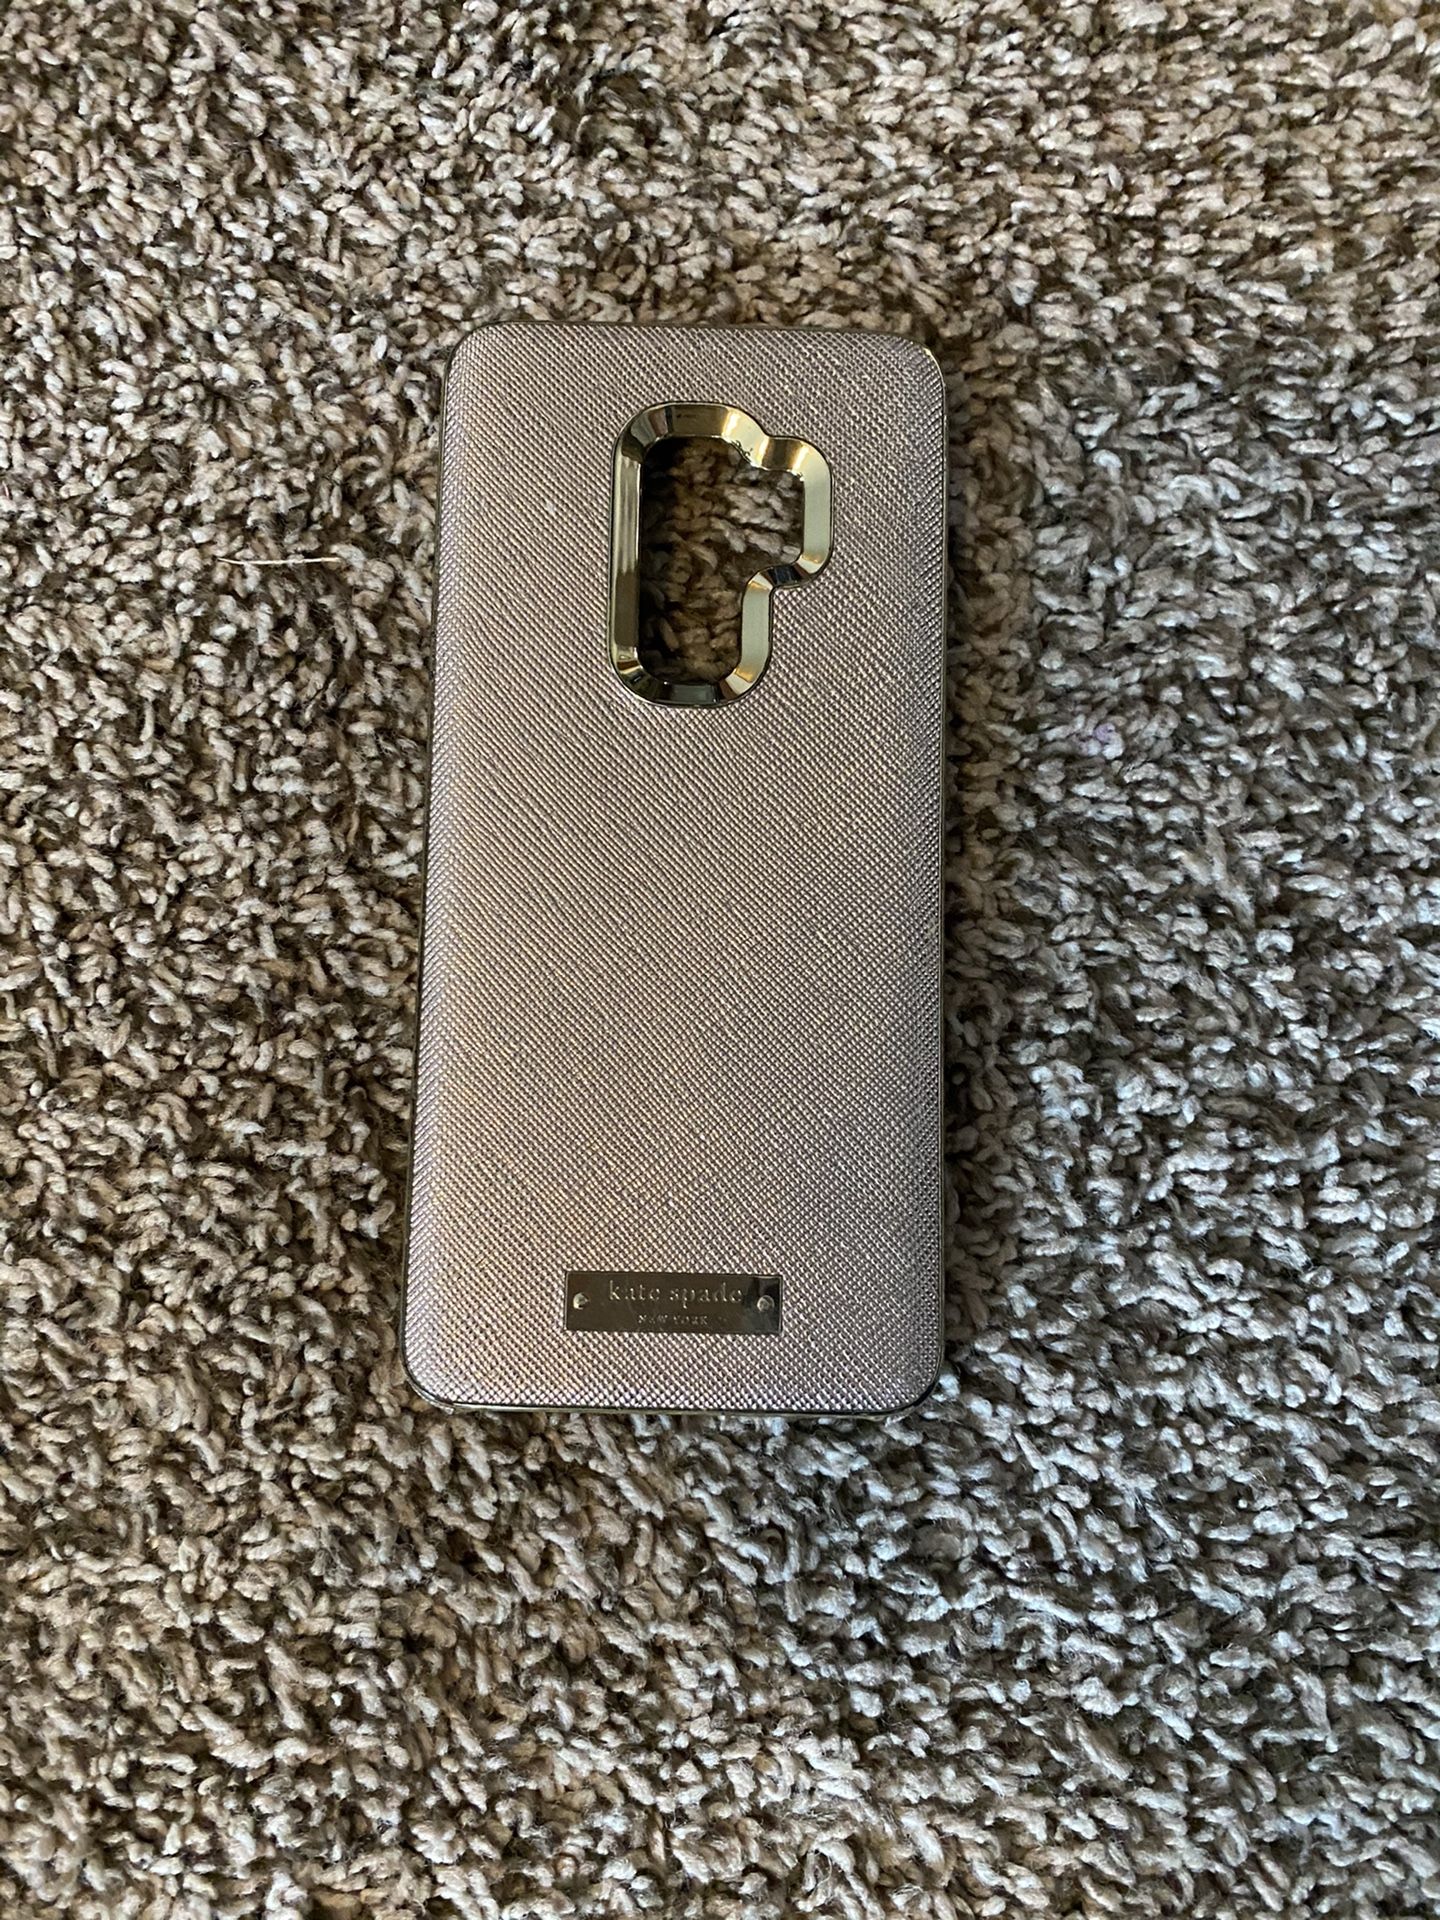 S9+ Kate spade phone case